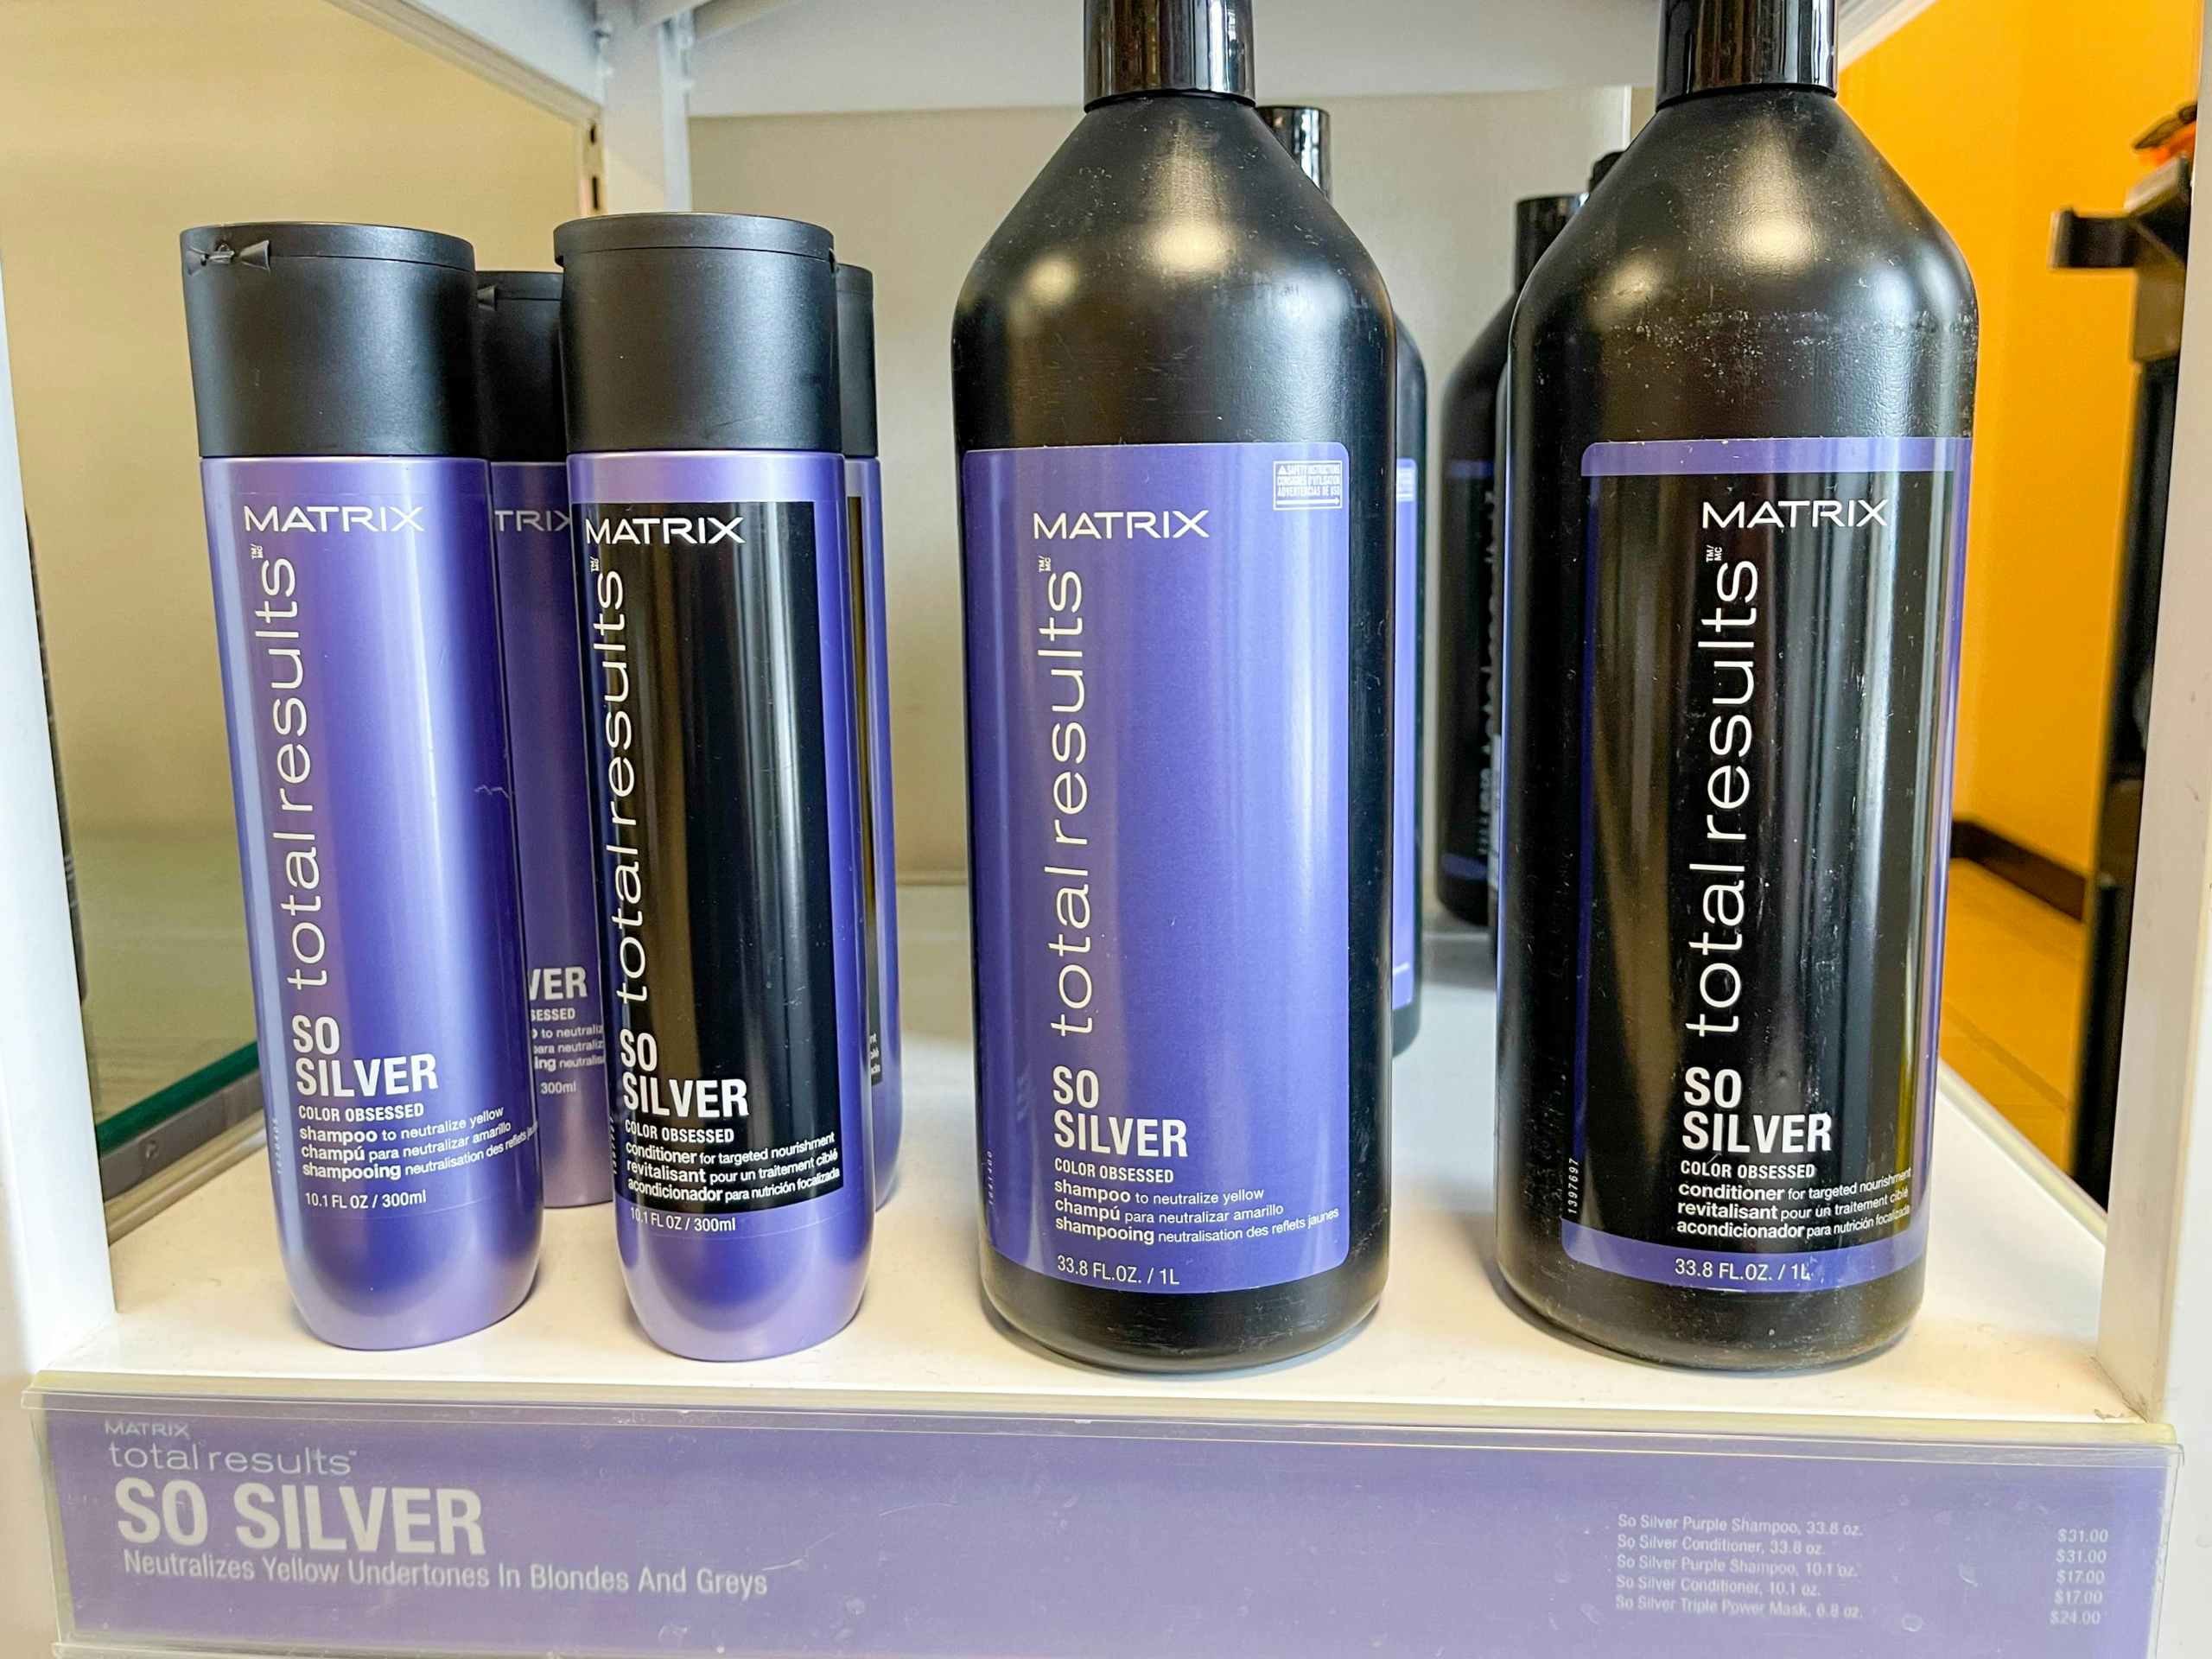 matrix hair products on shelf